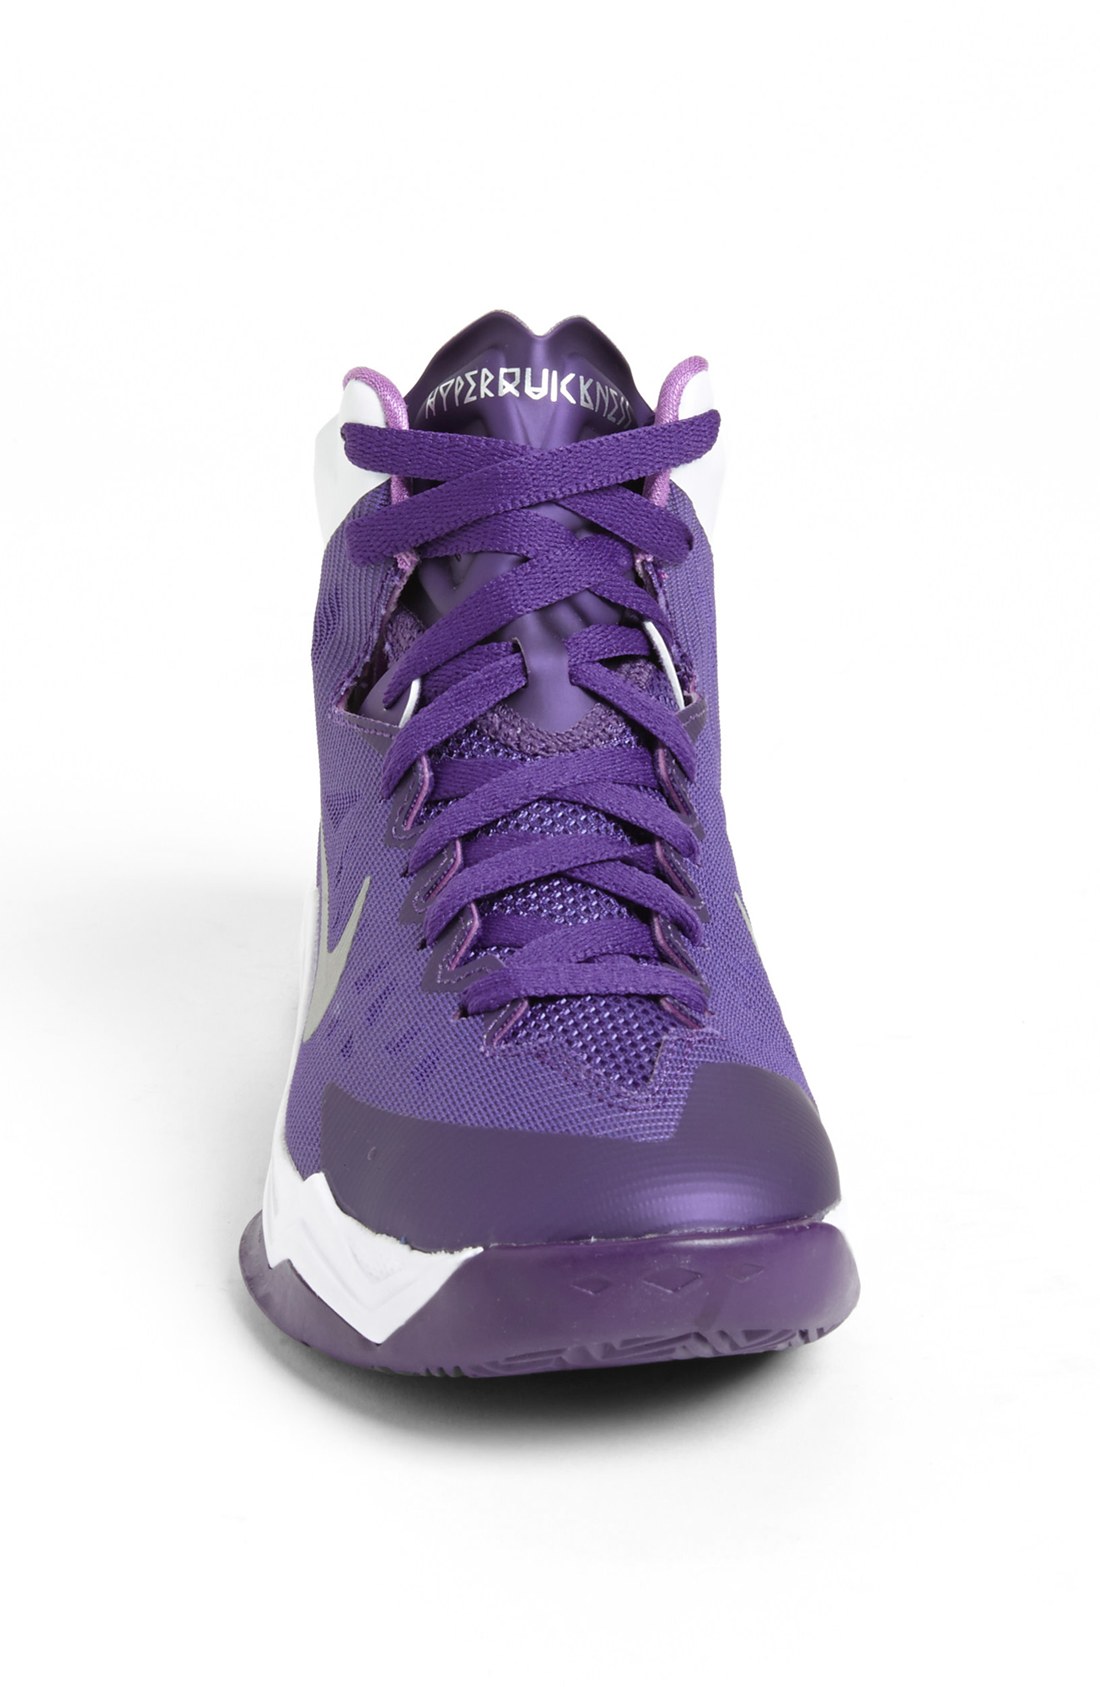 Nike Hyper Quickness Tb Basketball Shoe in Purple (Court